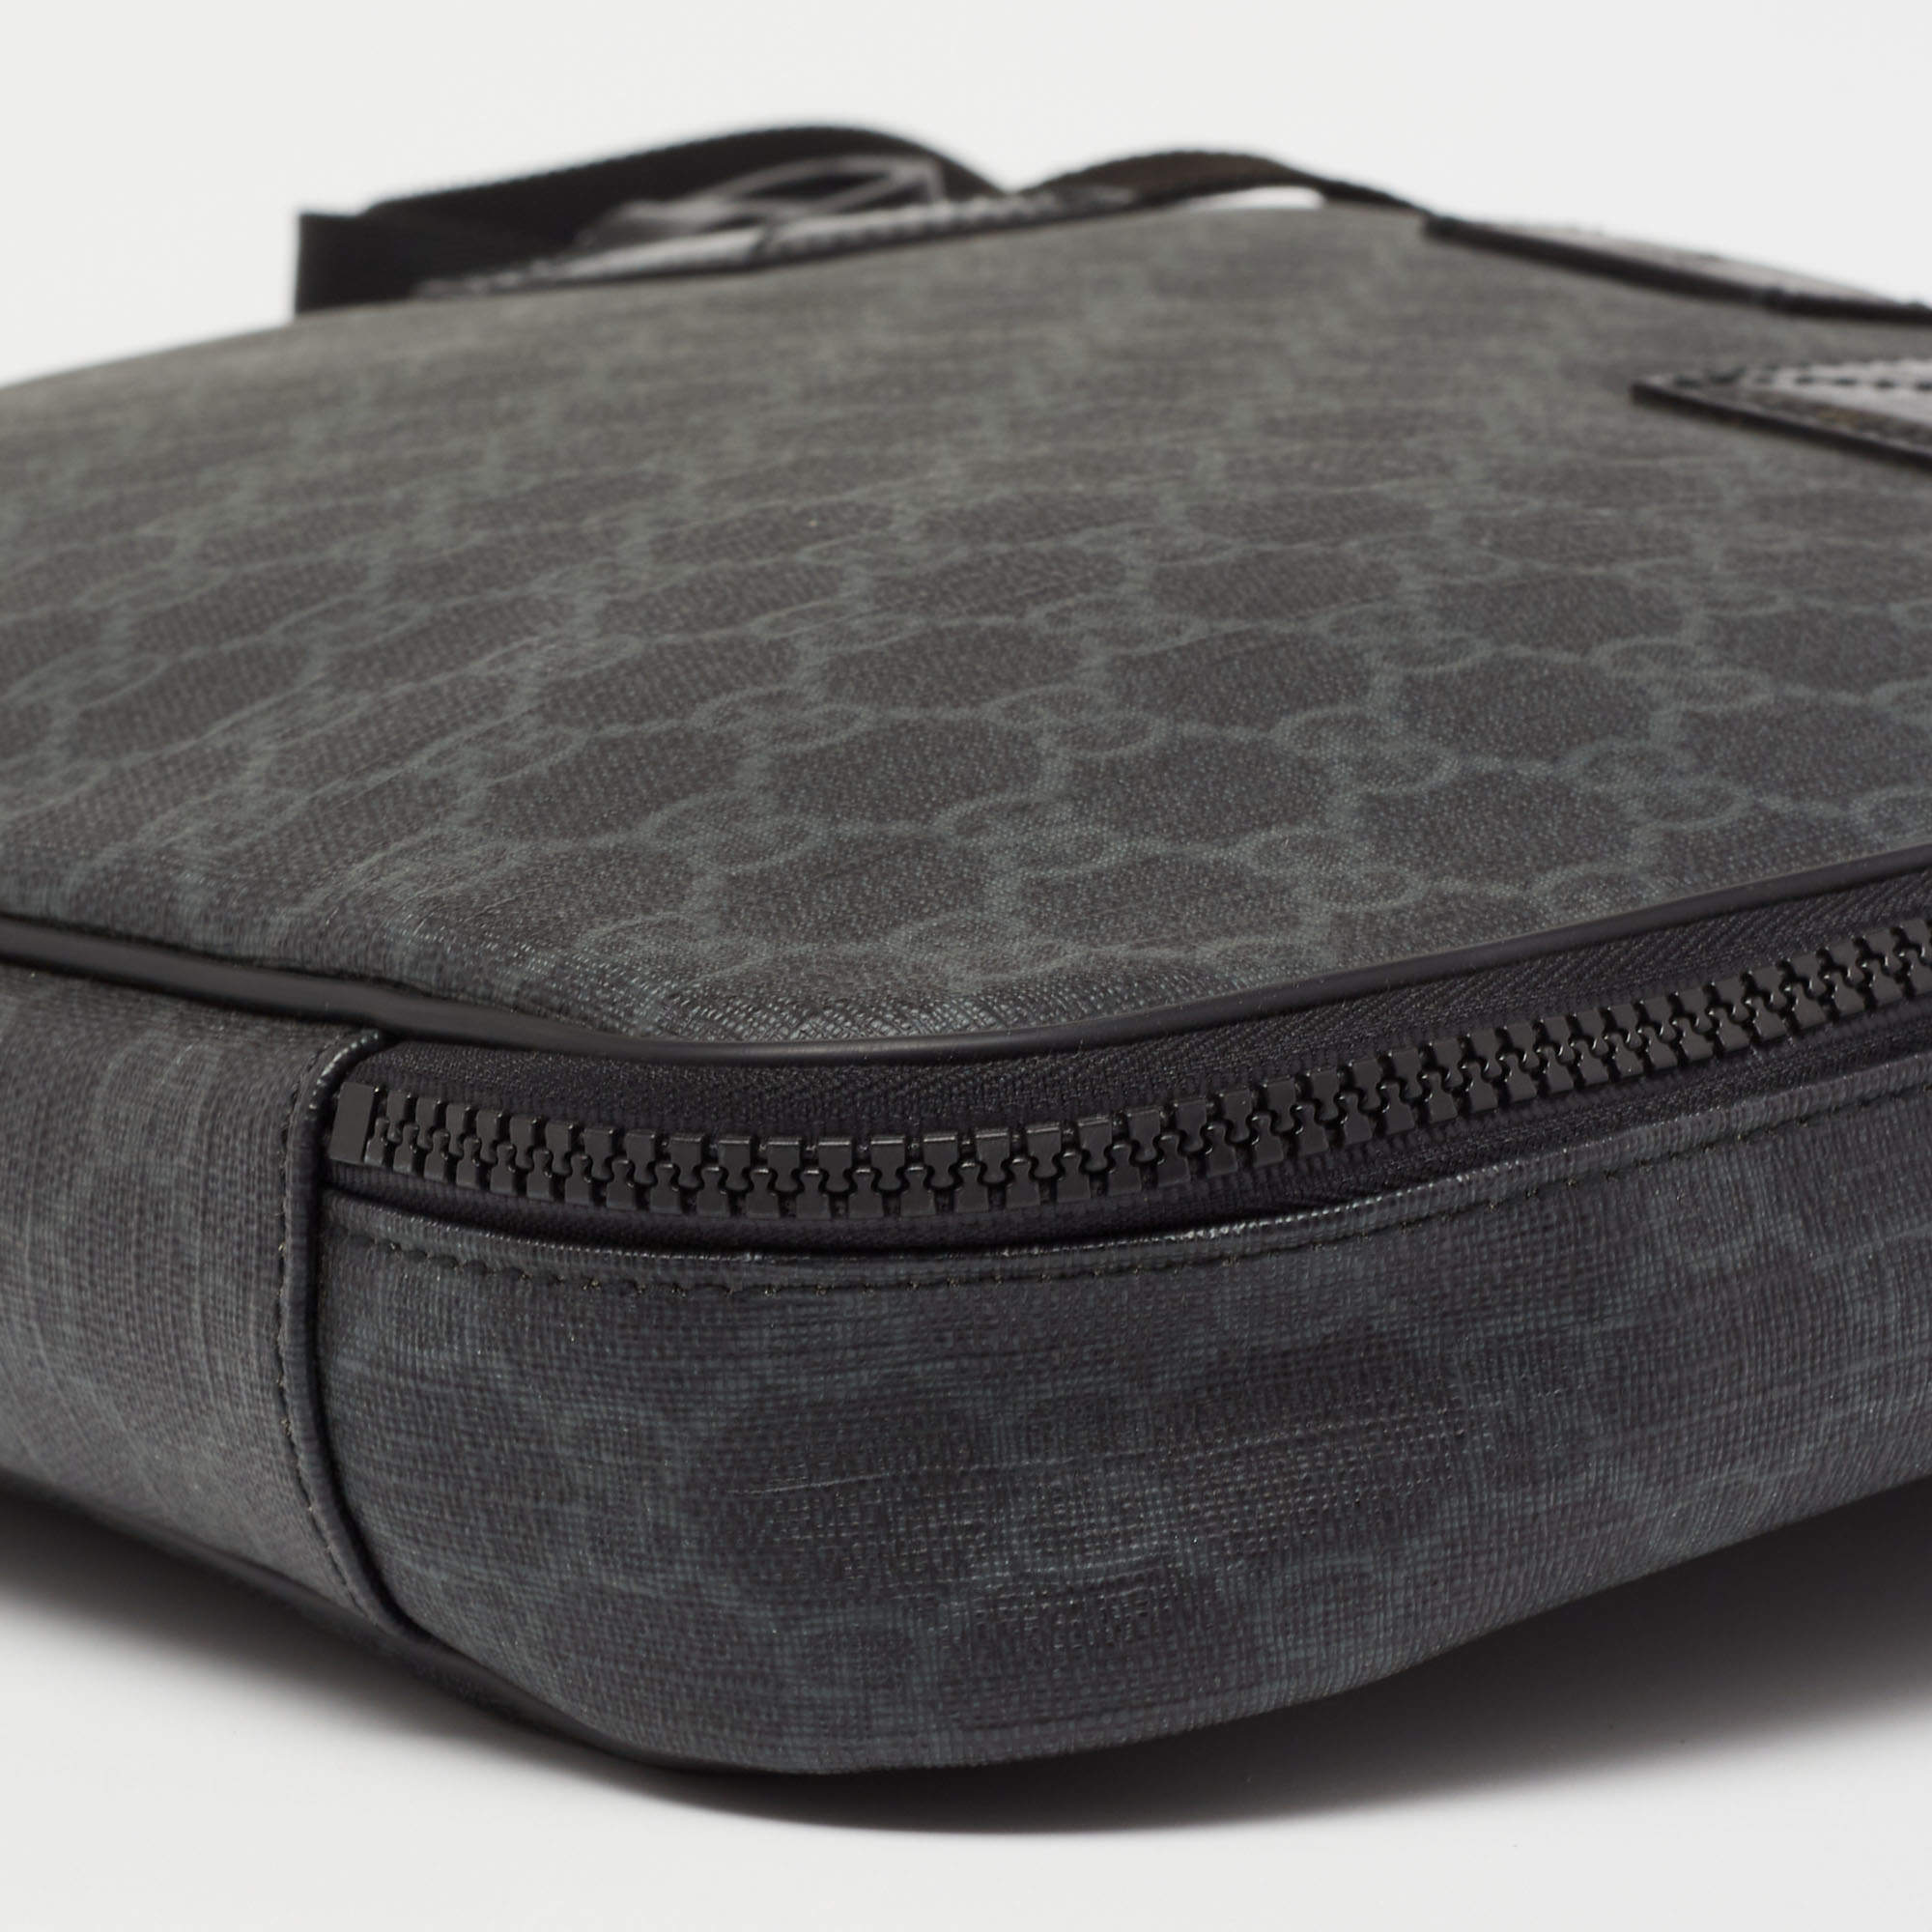 Laptop bags & briefcases Gucci - GG supreme briefcase - 406384KHN7N9772